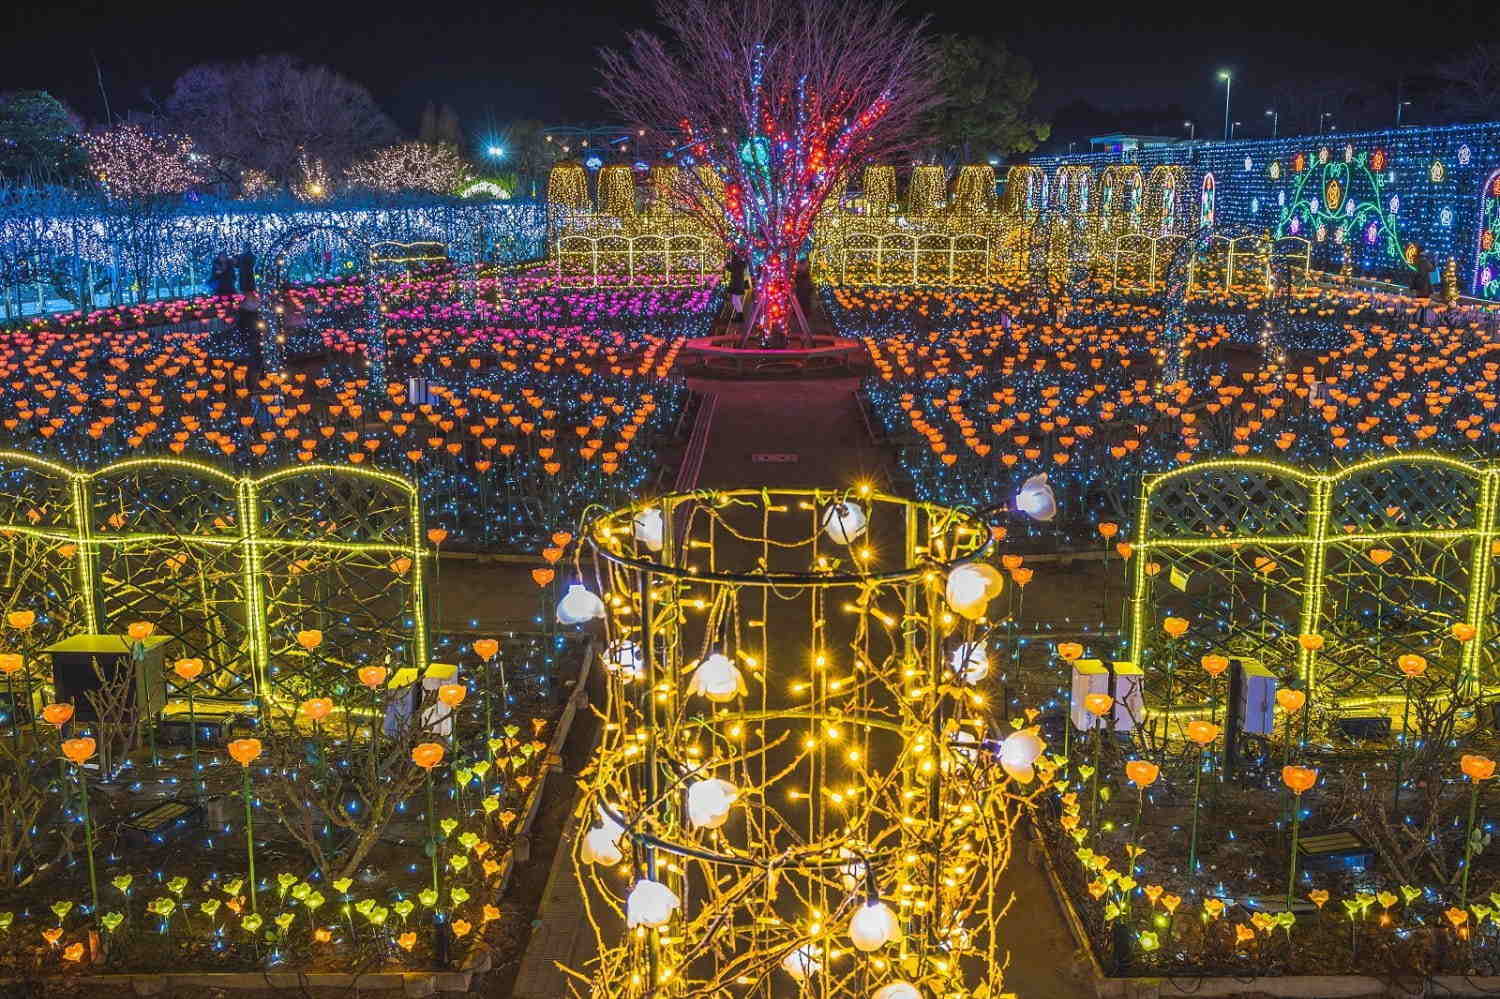 Ashikaga Flower Park Illumination 2020 8 - rose garden of light